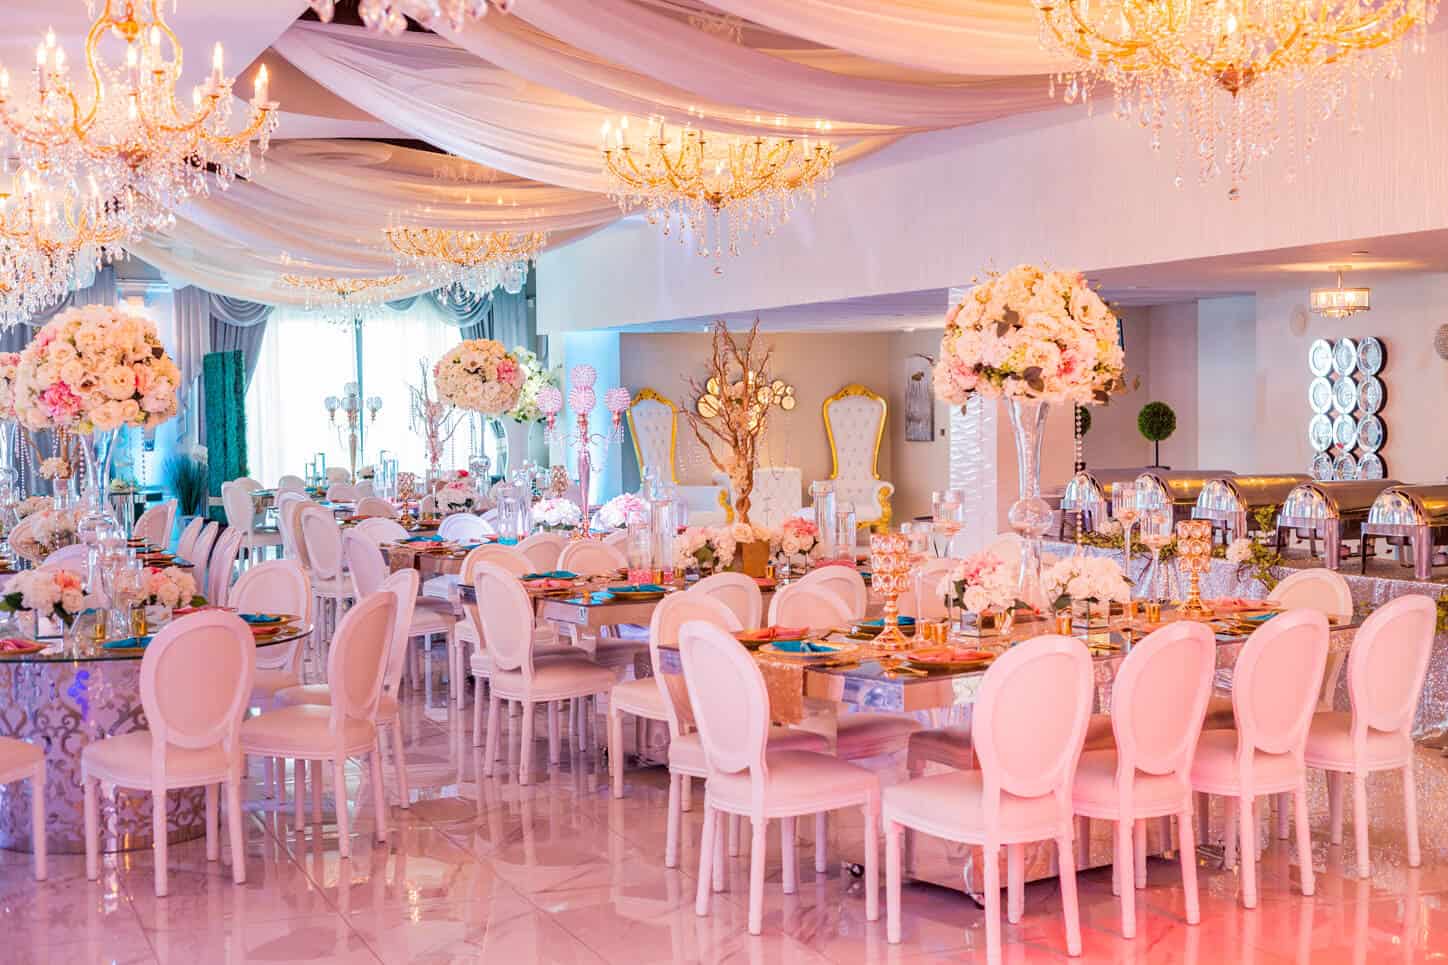 photo of wedding venue up lighting done by wedding vendor designer | Photo by White House Wedding Photography